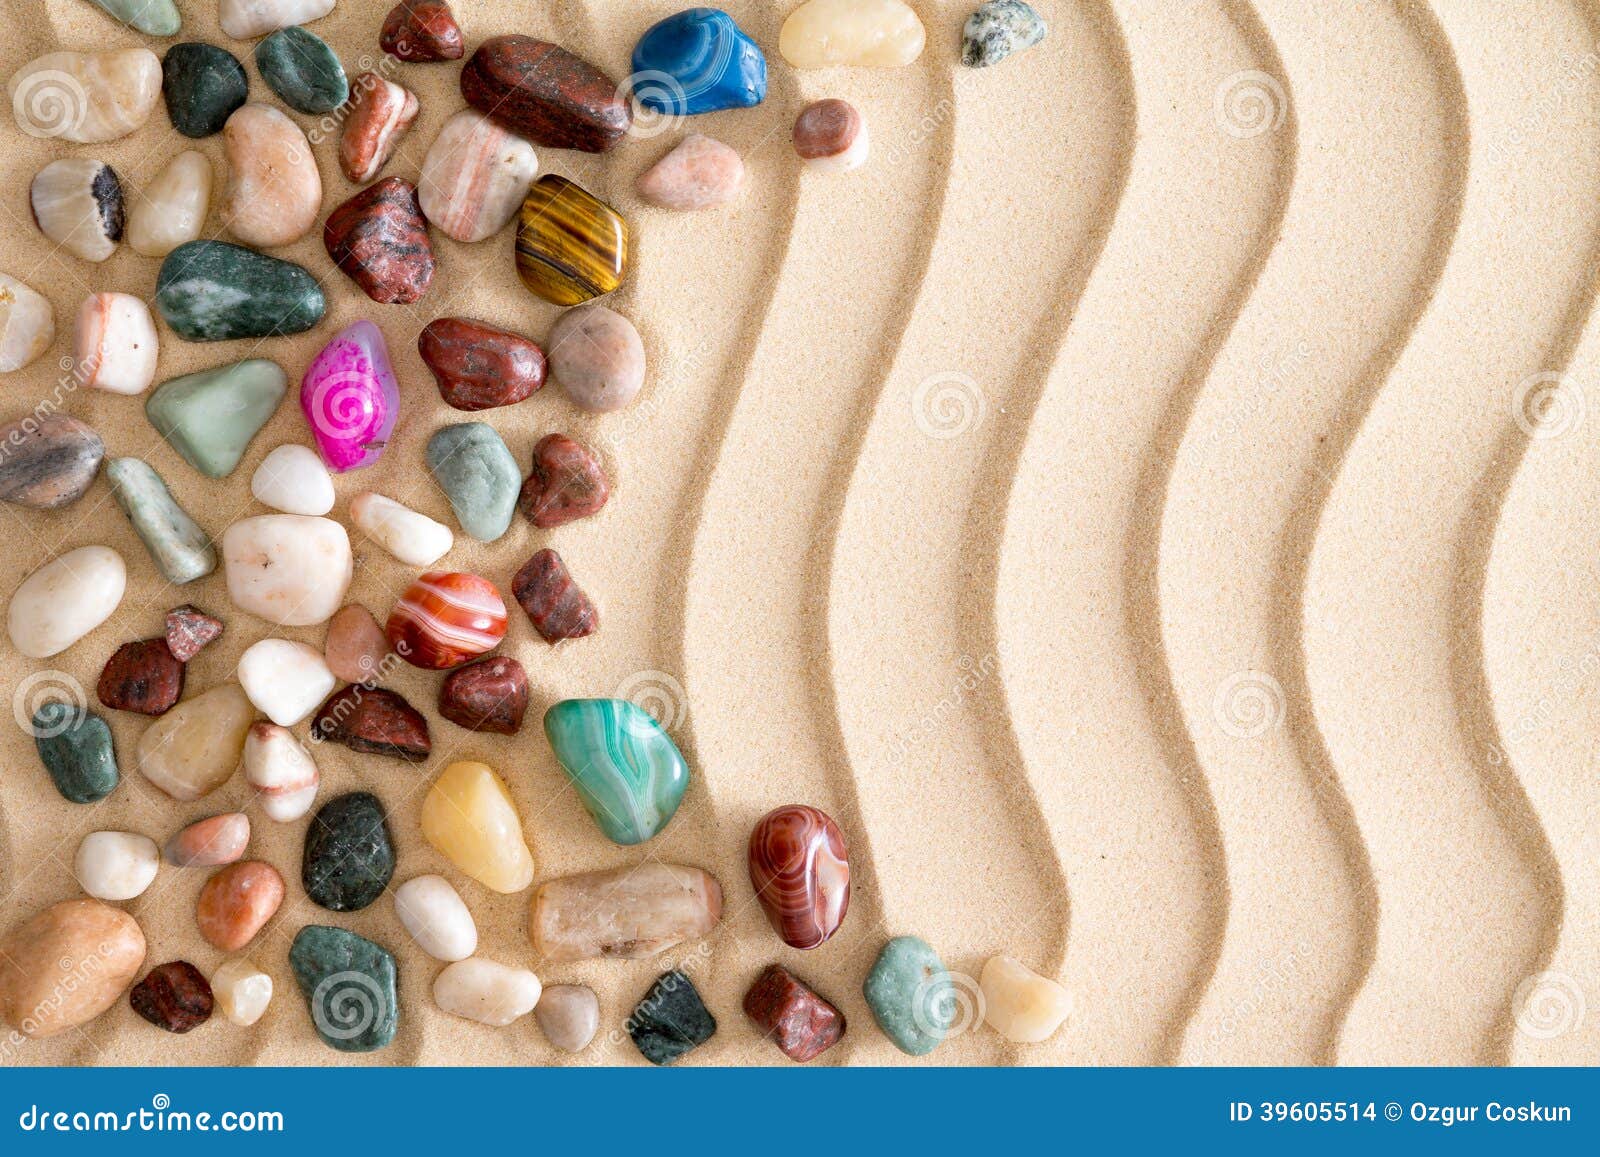 pebbles and gemstones on golden beach sand